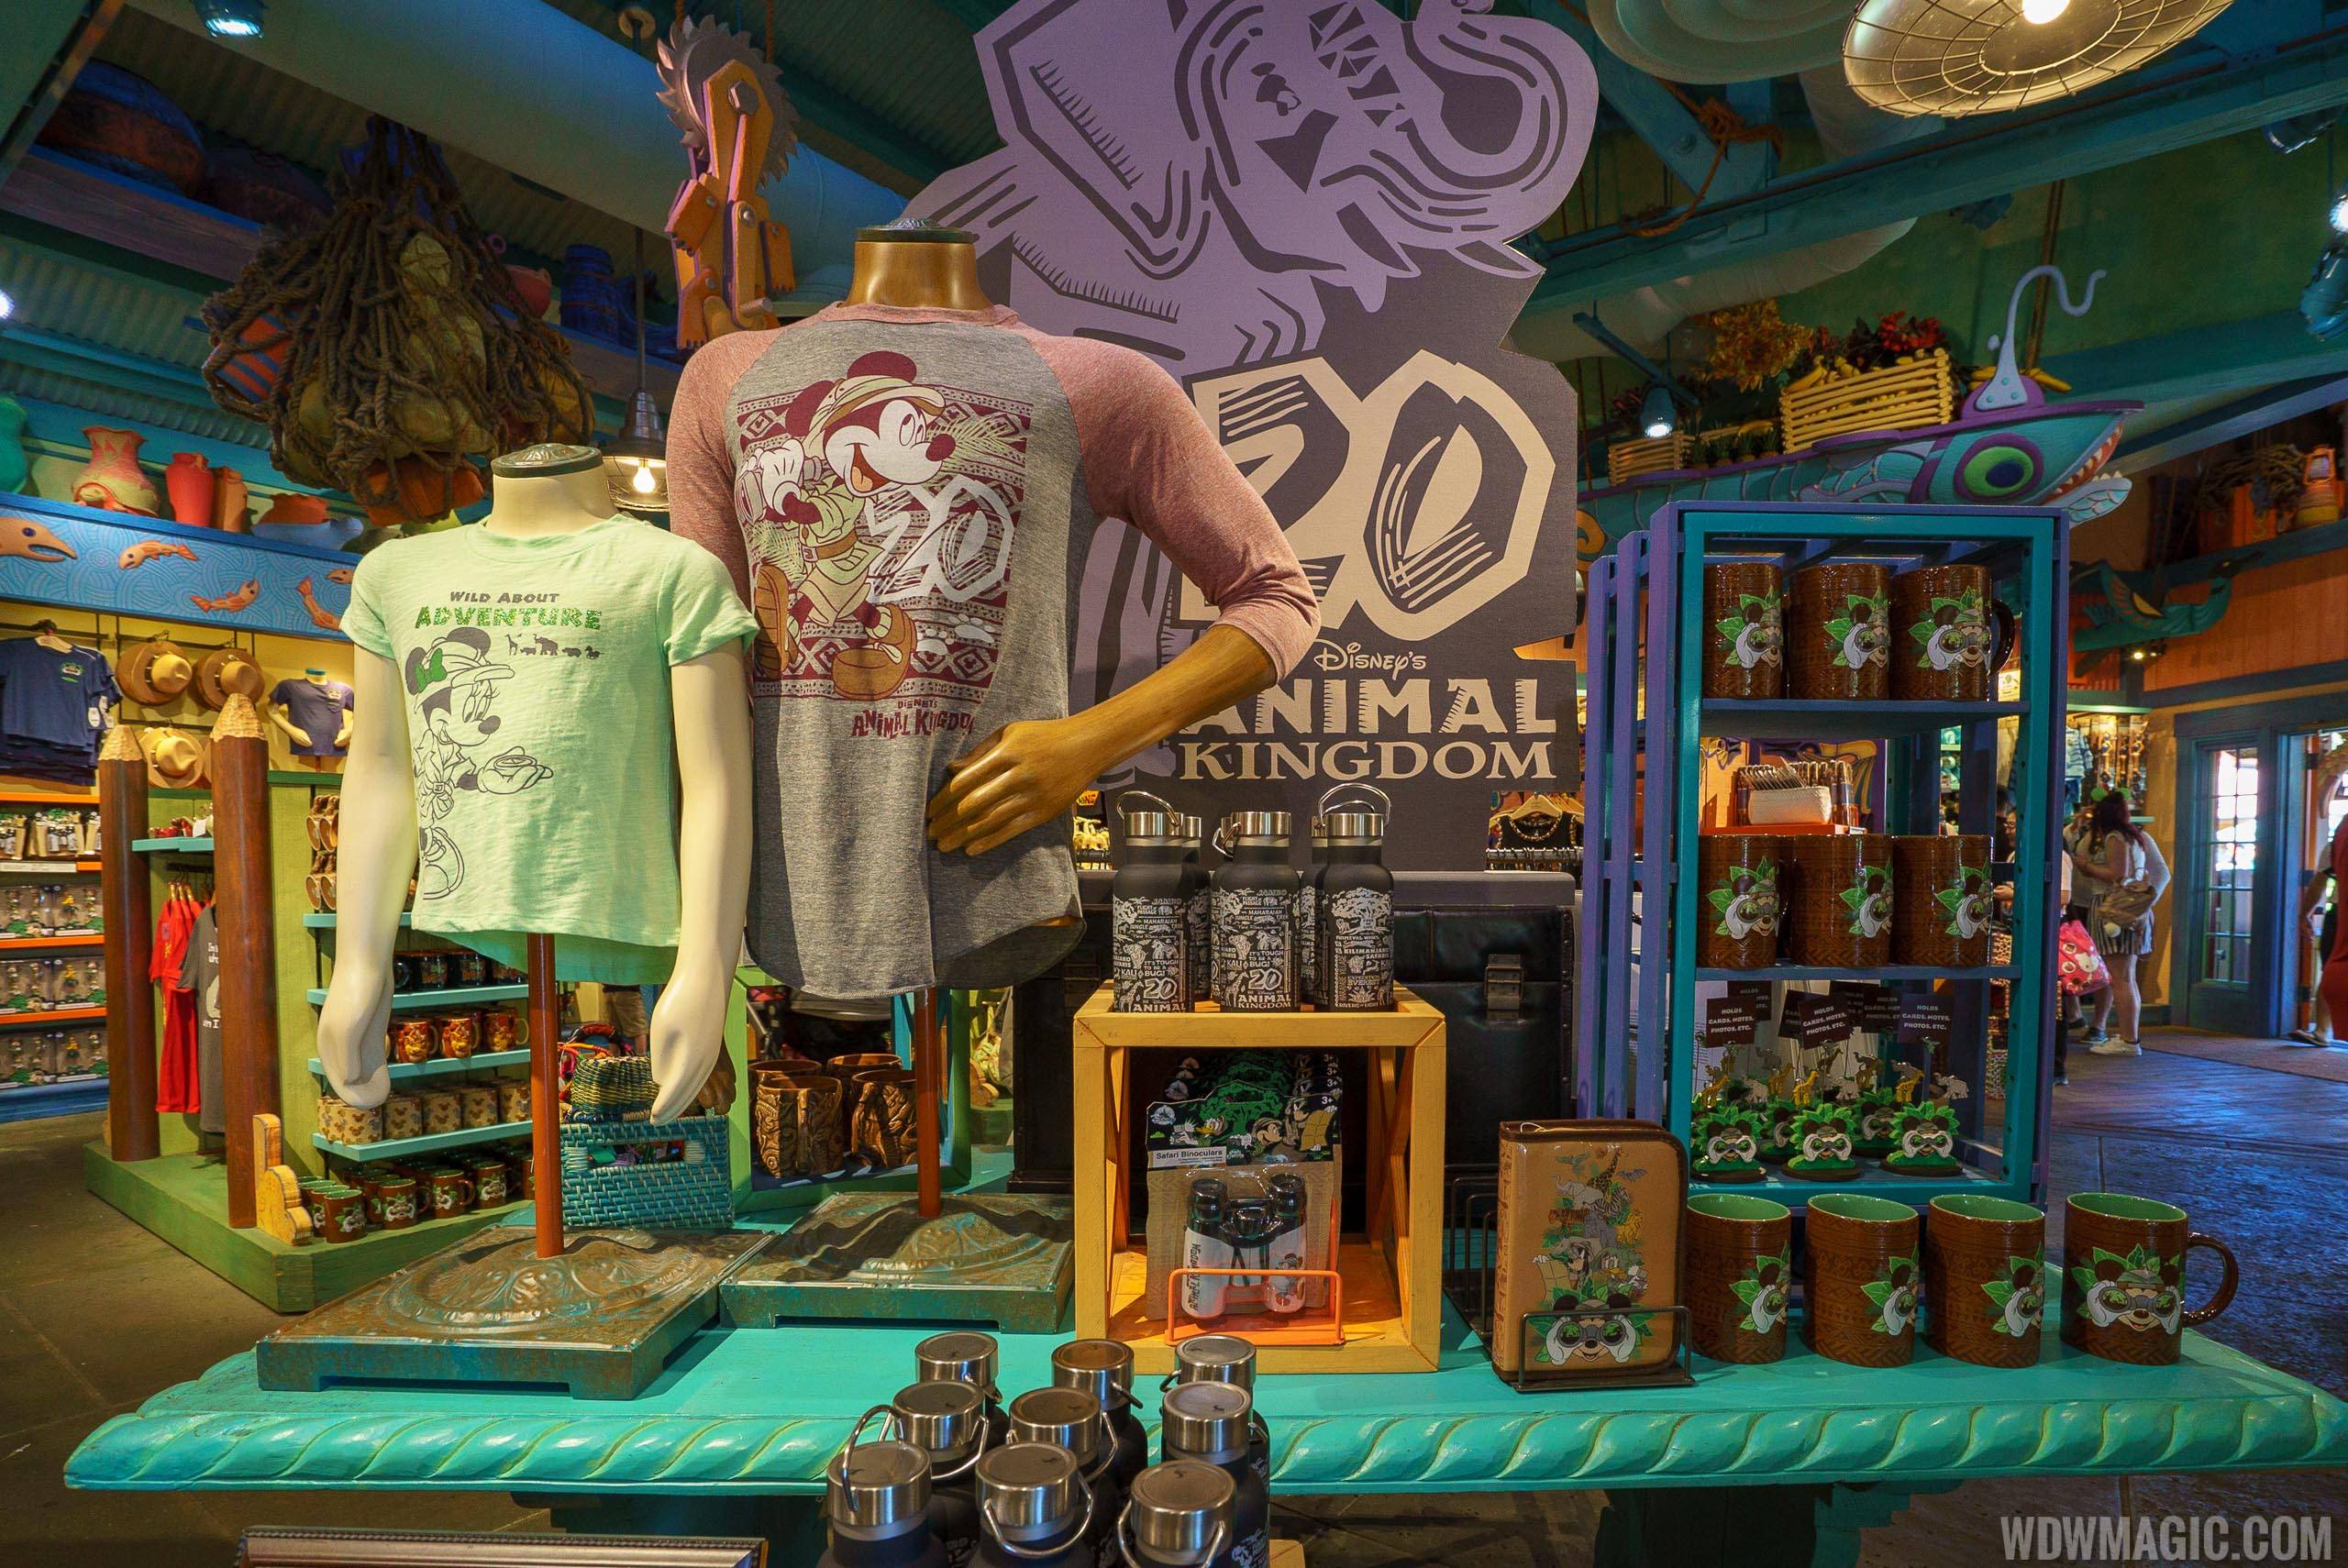 PHOTOS - Disney's Animal Kingdom 20th Anniversary merchandise